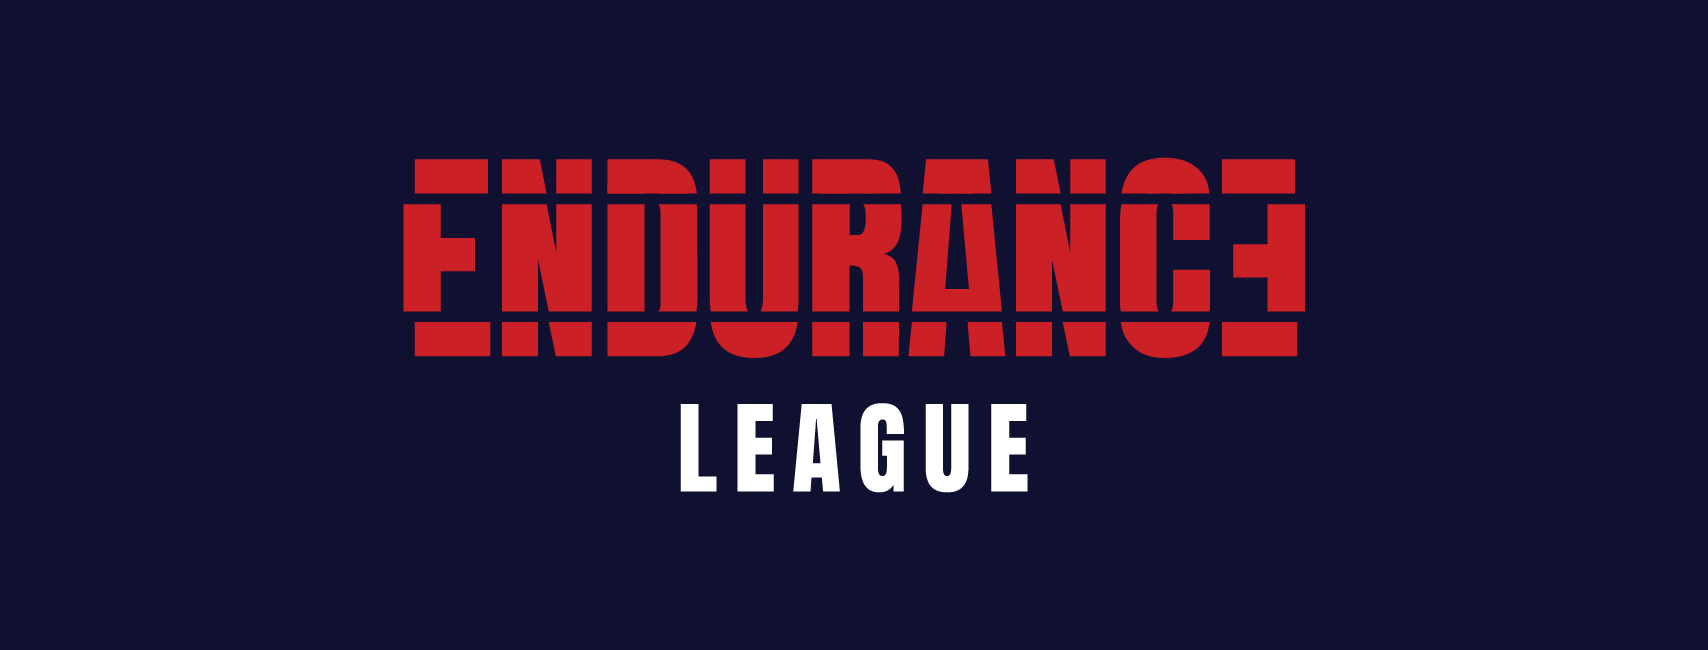 endurance-league-icon